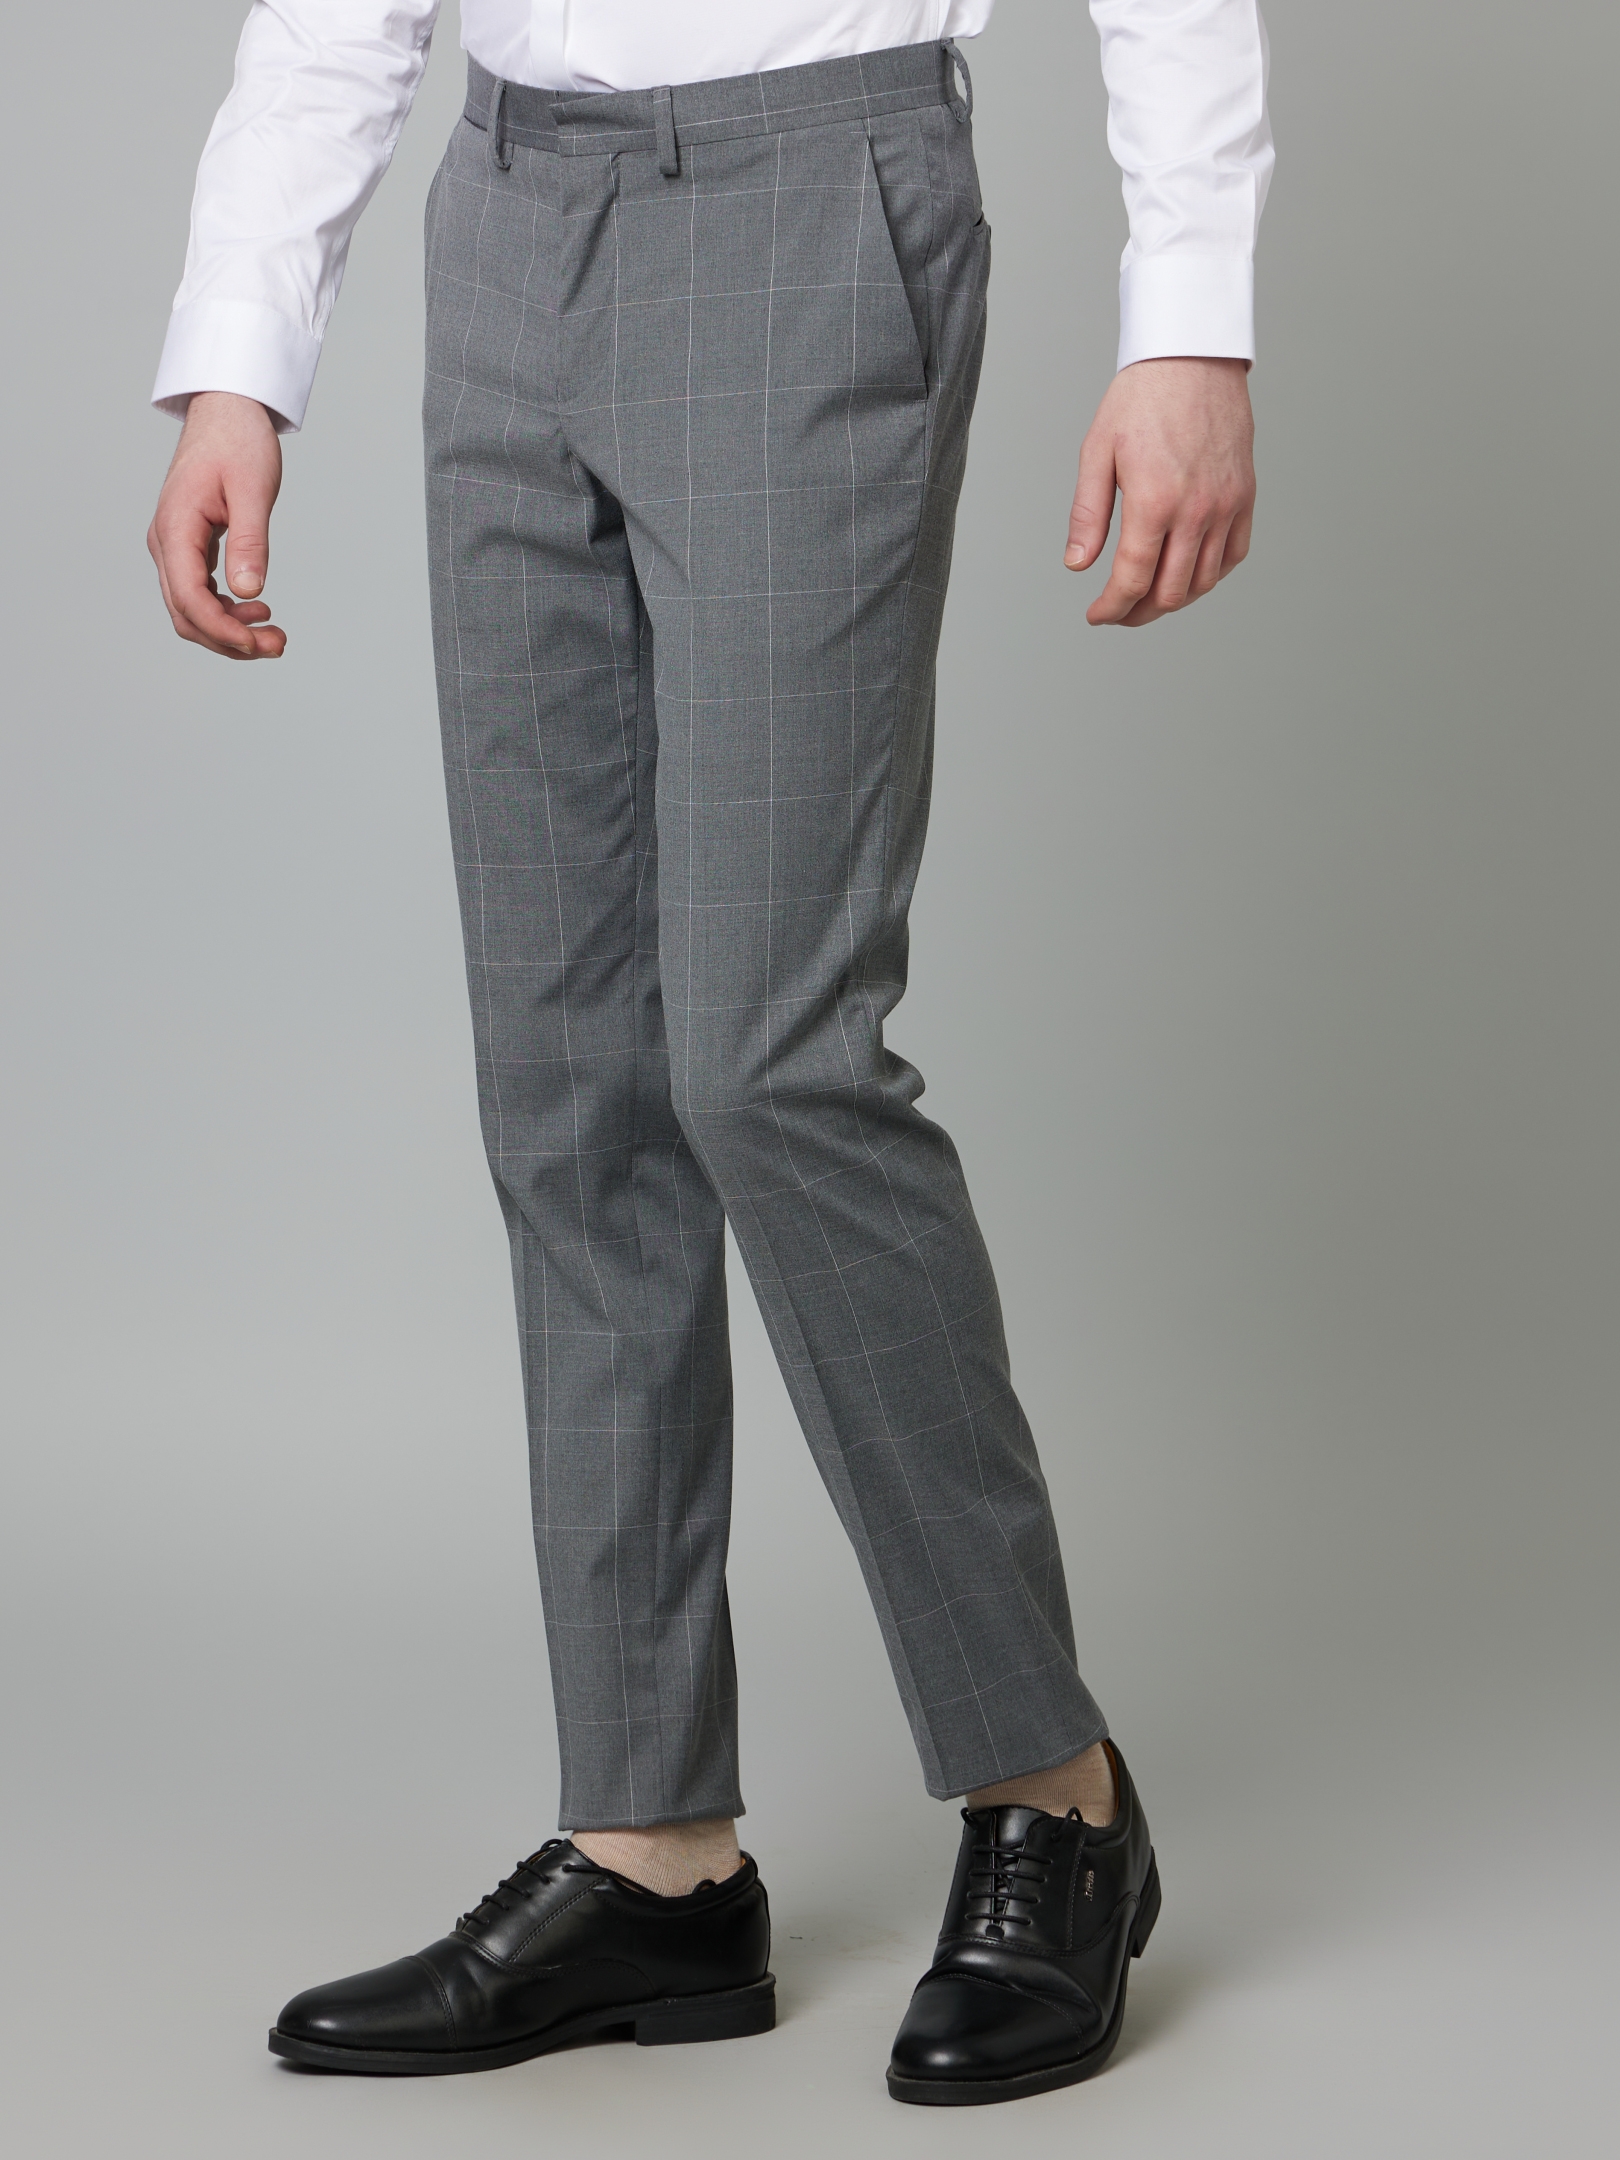 Men's Polyester Dress Slacks by Haggar Adaptive Clothing for Seniors,  Disabled & Elderly Care